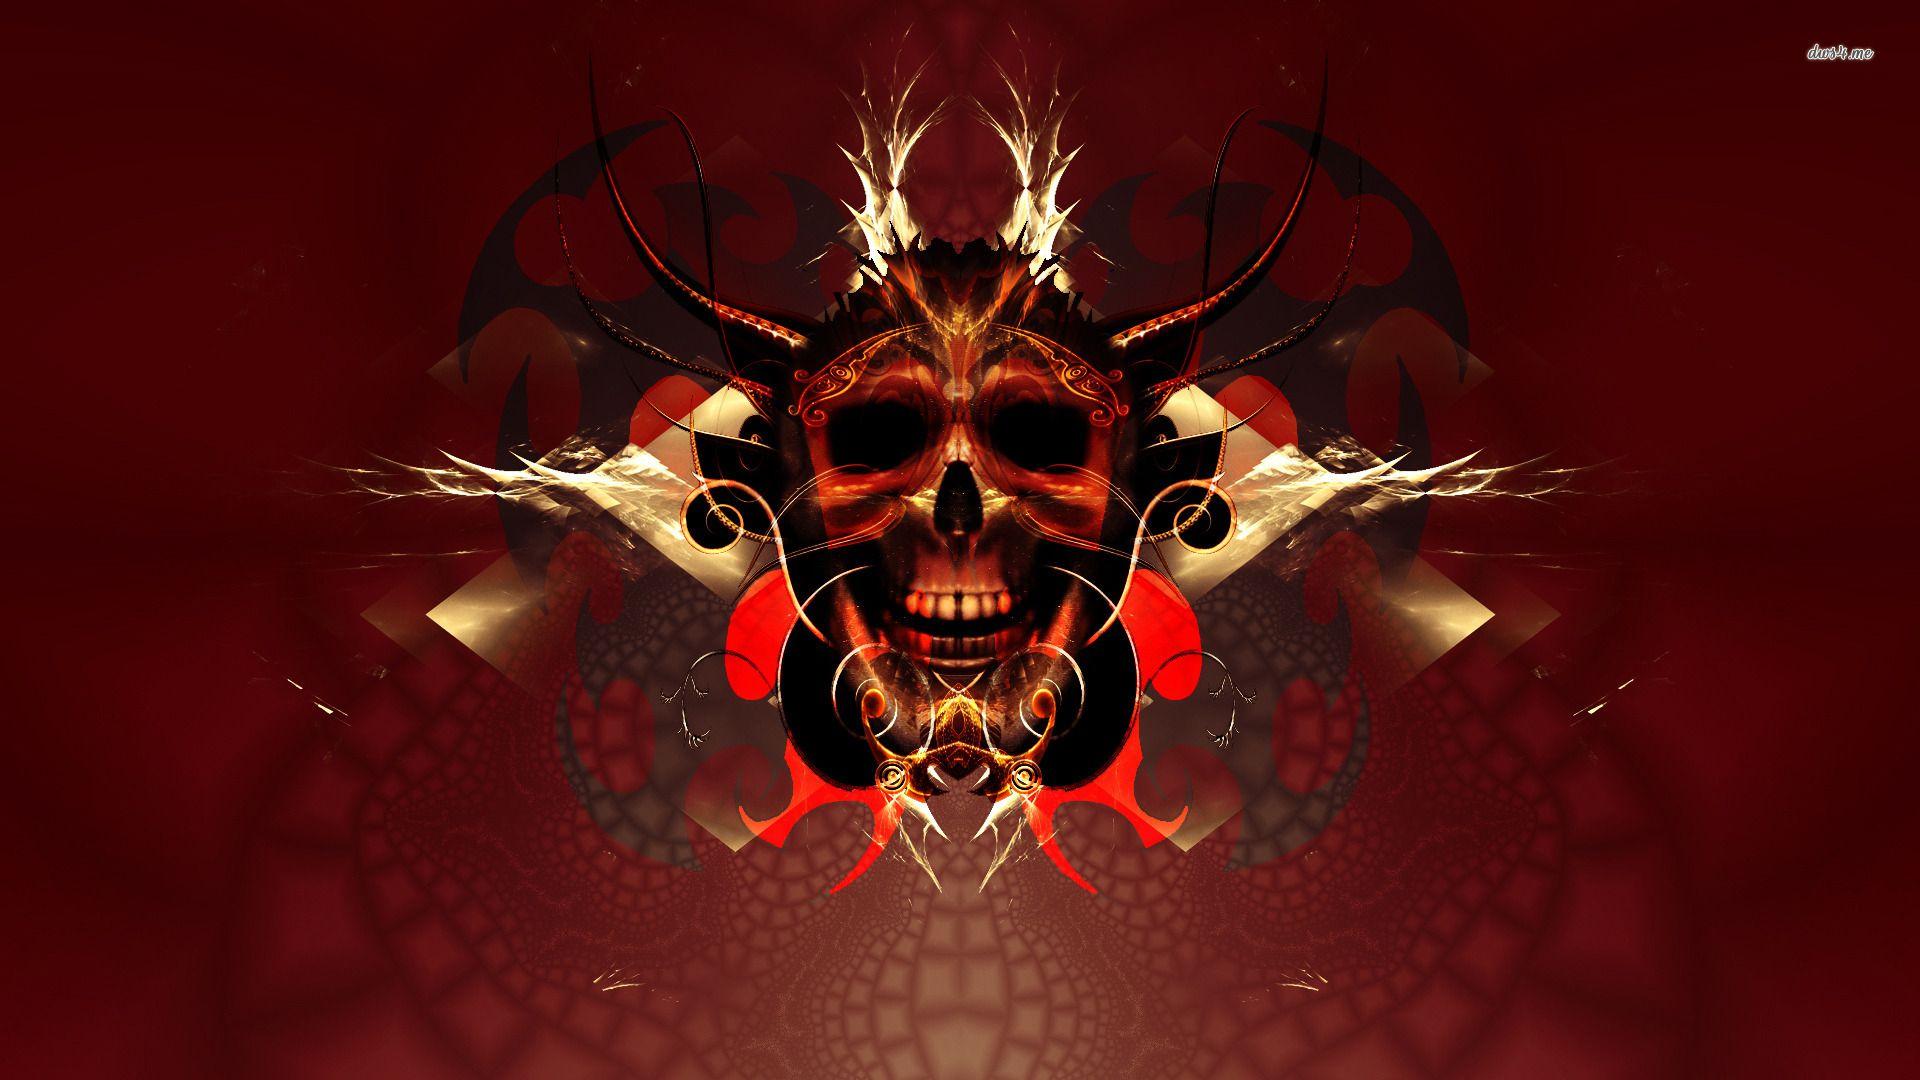 Skull wallpaper free download Gallery